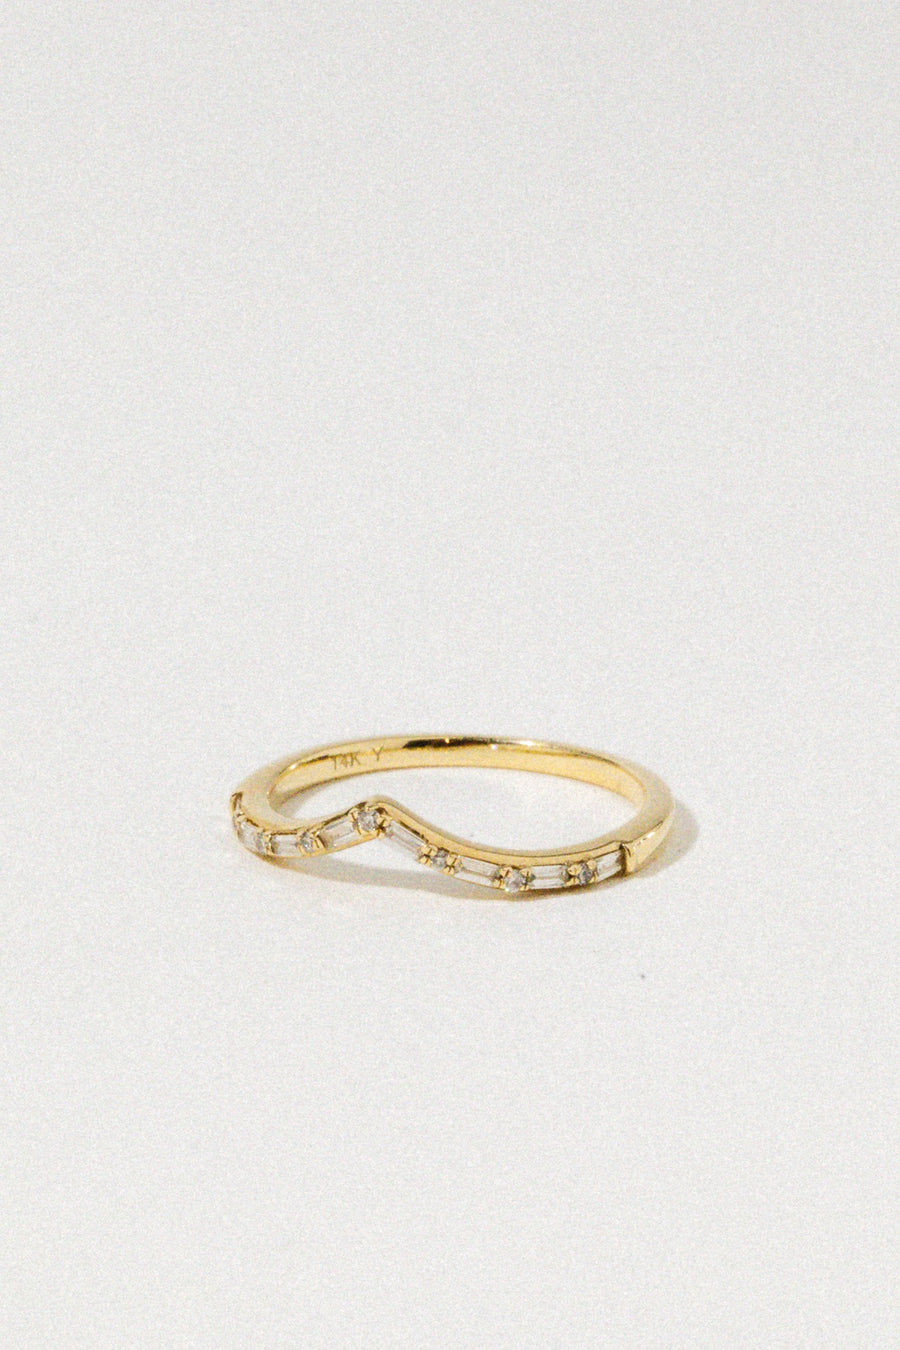 Tresor Jewelry Gold / US 6 14kt Crown Diamond Ring